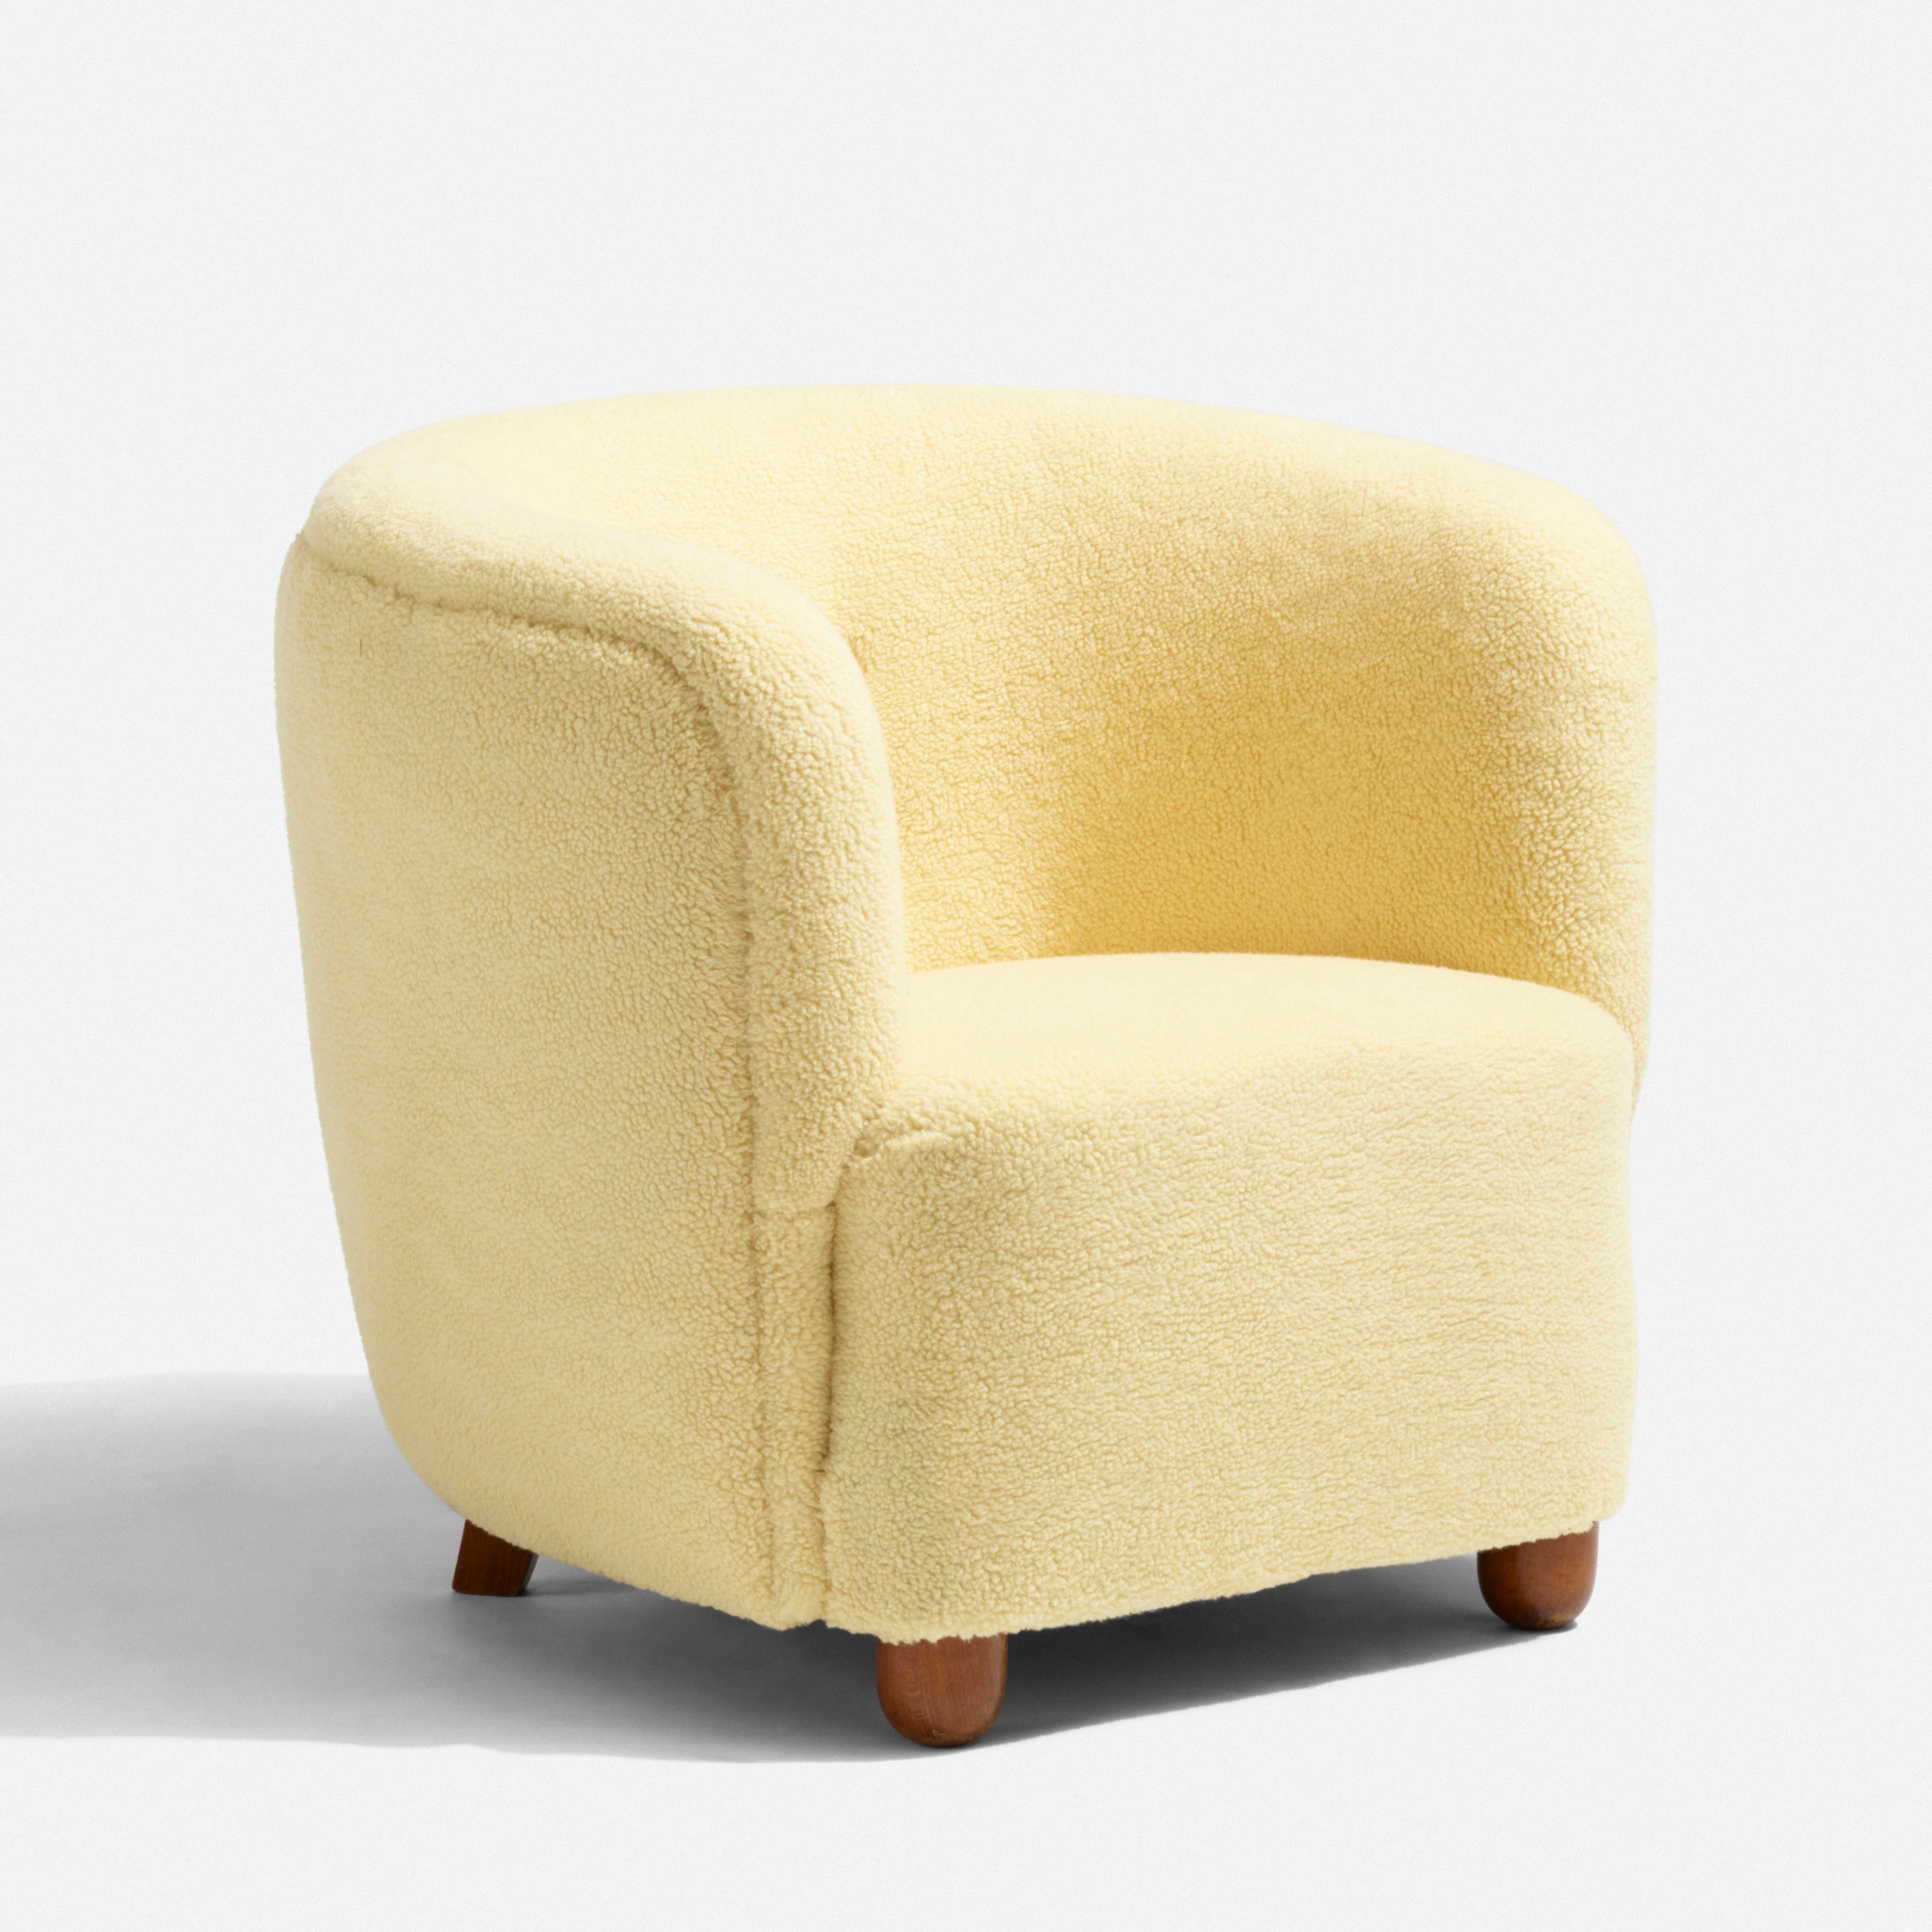 129_2_scandinavian_design_may_2019_flemming_lassen_attribution_lounge_chair__wright_auction